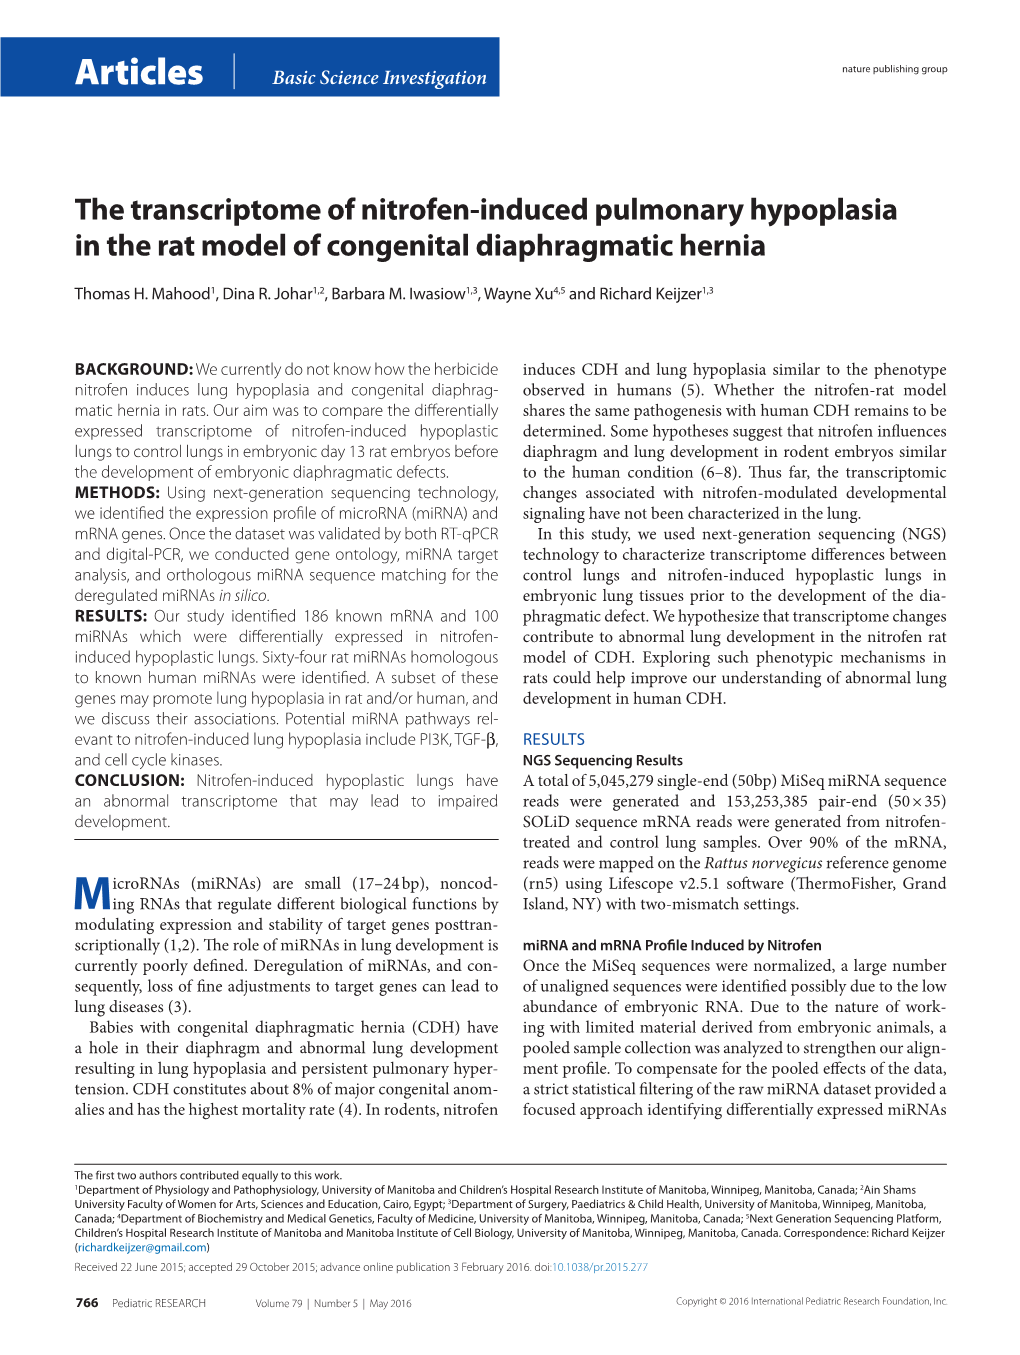 The Transcriptome of Nitrofen-Induced Pulmonary Hypoplasia in the Rat Model of Congenital Diaphragmatic Hernia